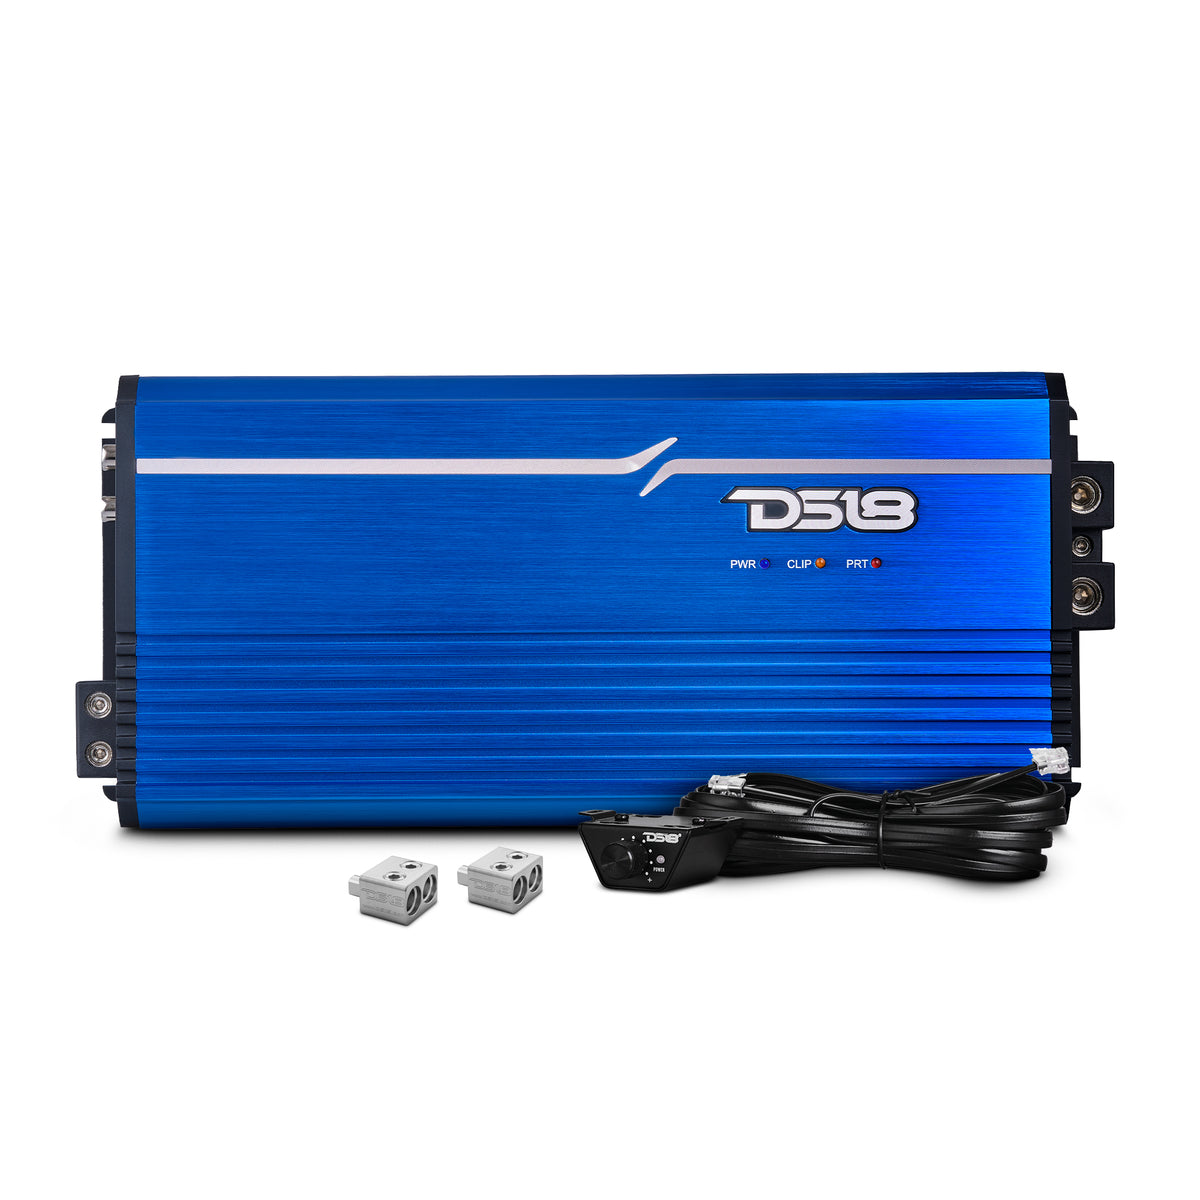 FRP Compact Full-Range Class D 1-Channel Amplifier 5,000 Watts Rms @ 1-Ohm Blue